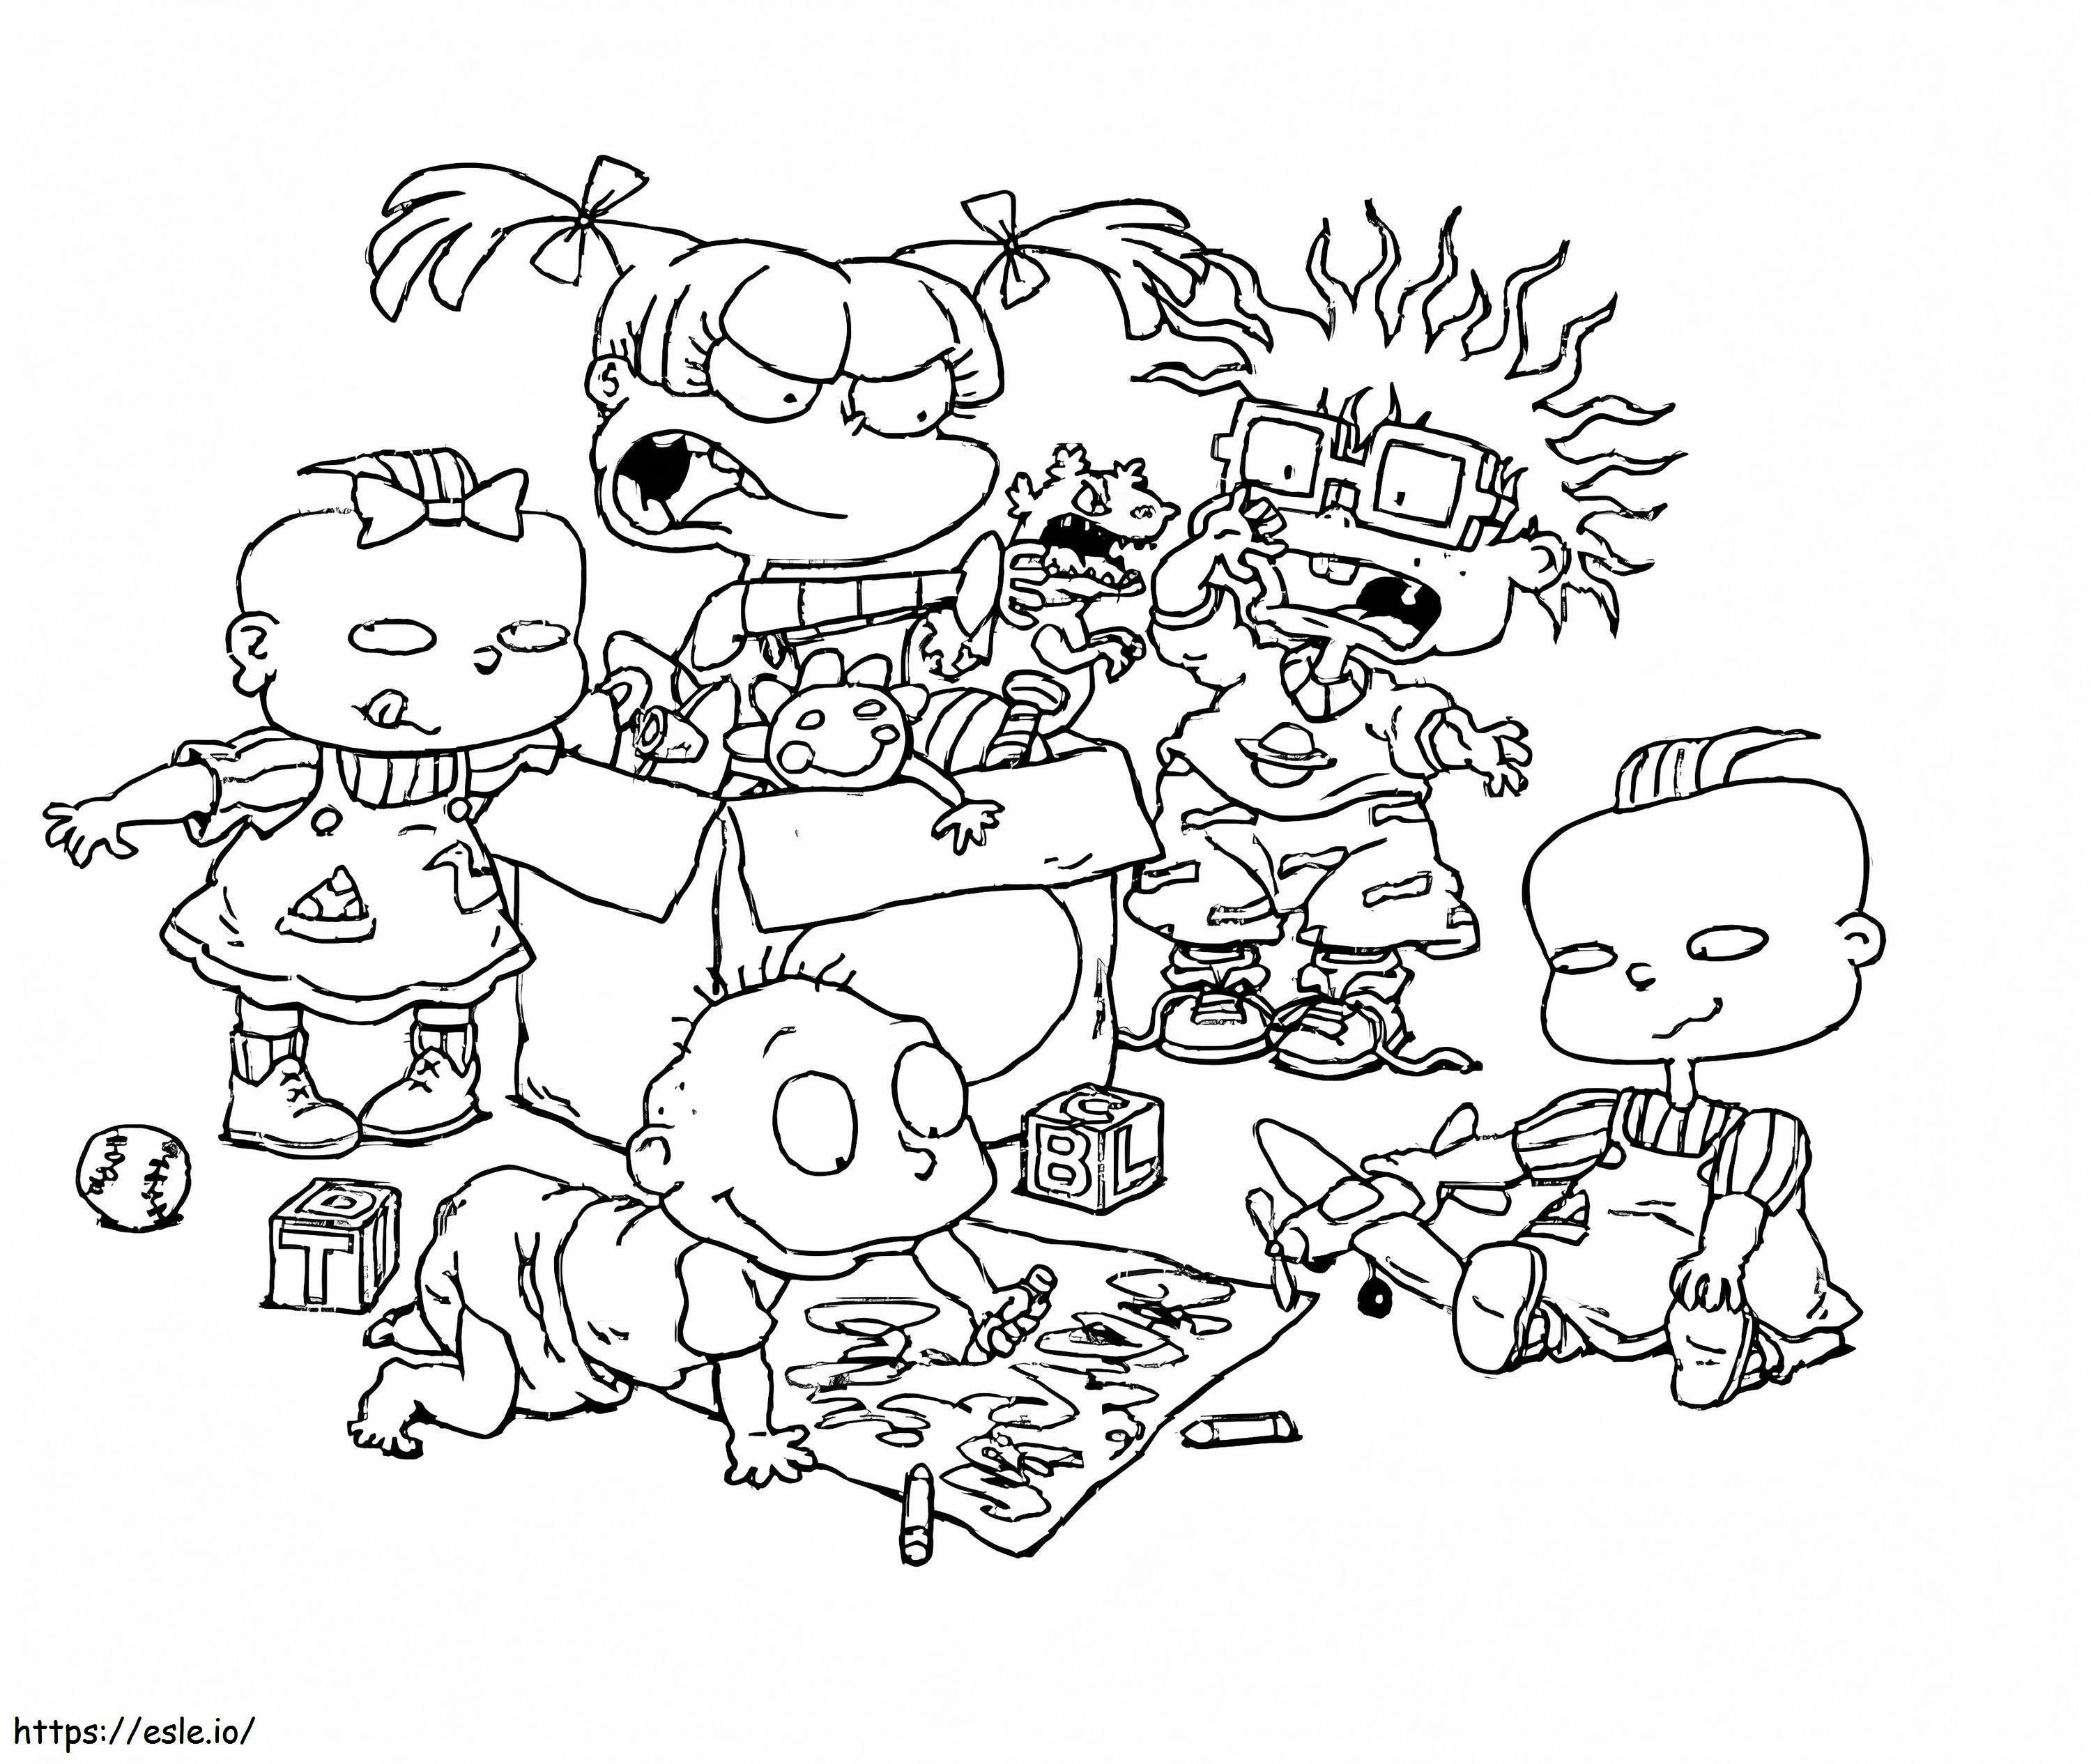 Personajes de Rugrats para colorear